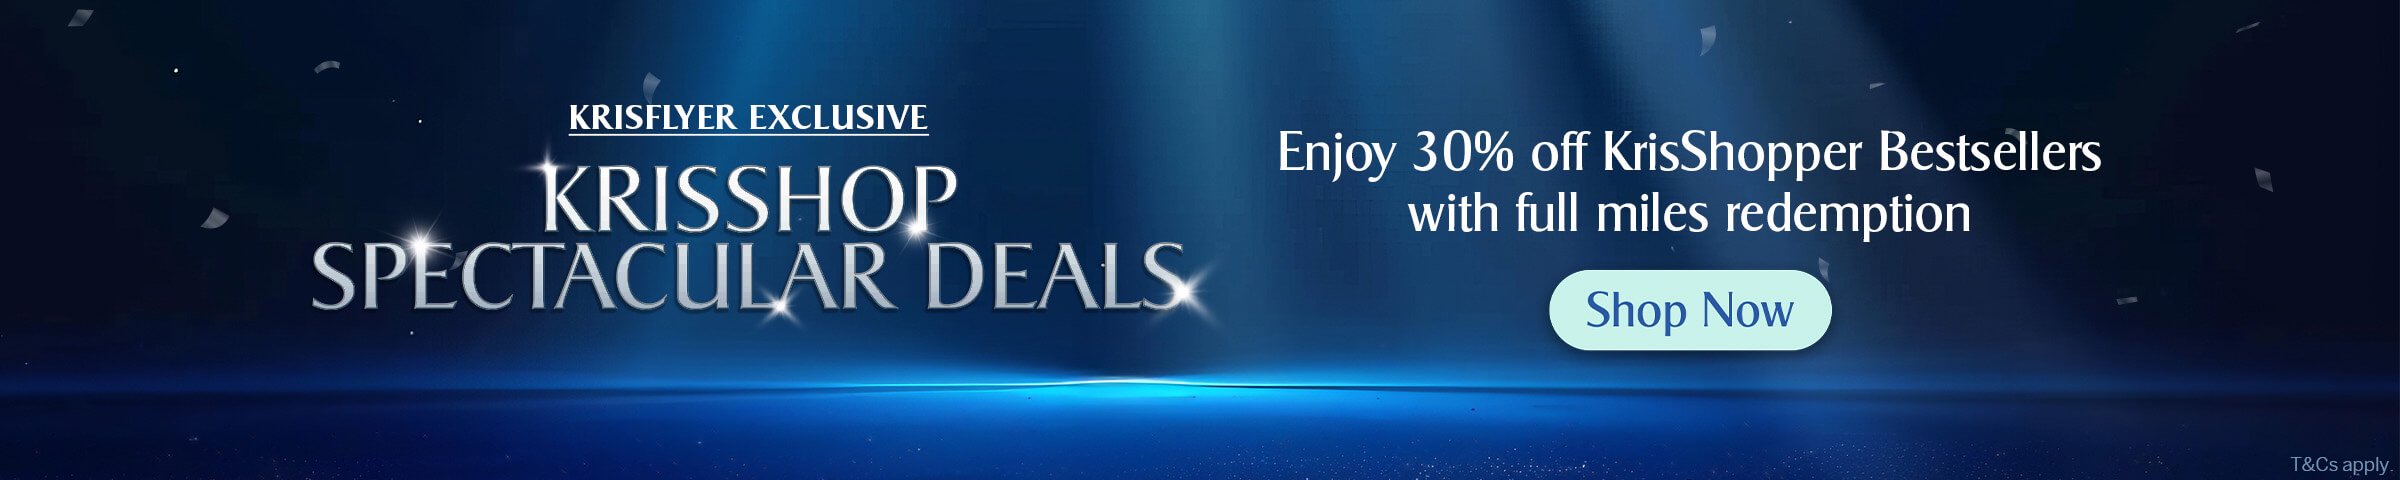 KrisShop Spectacular Deals